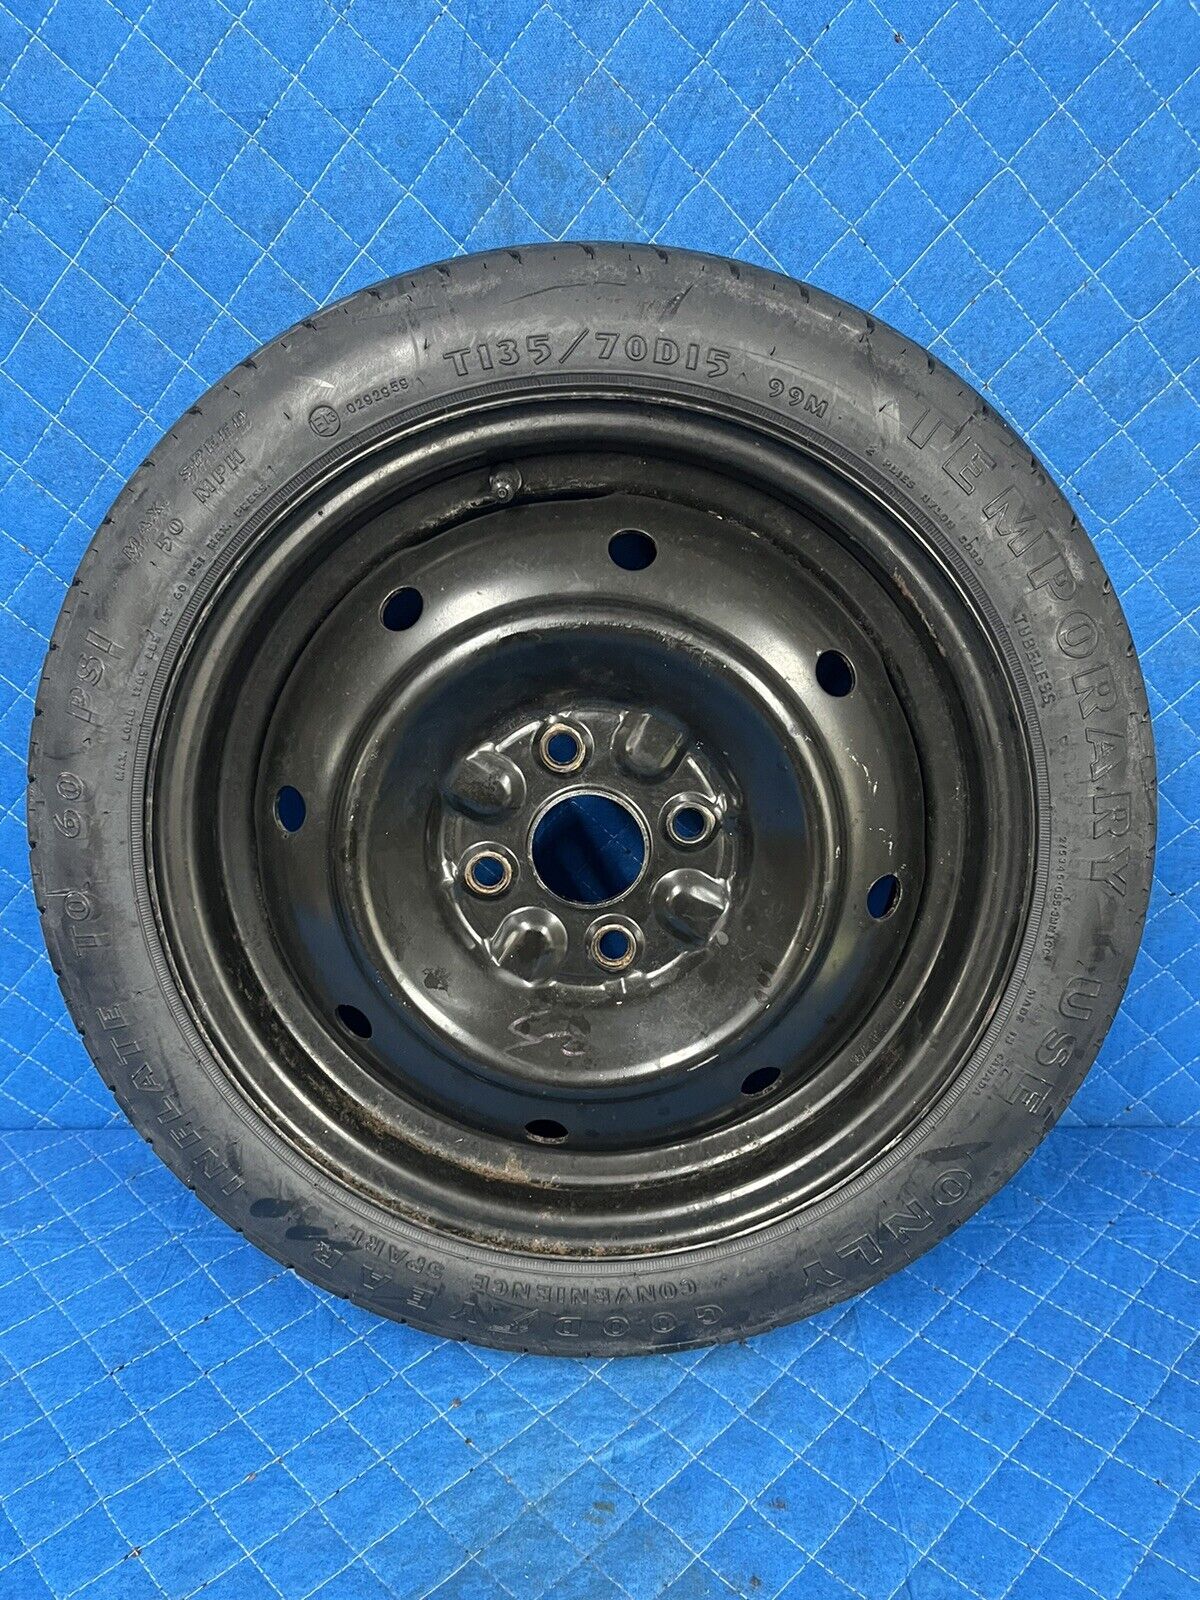 1997-2001 Toyota Corolla Spare Donut Tire Wheel Rim Oem 135/70/15-4